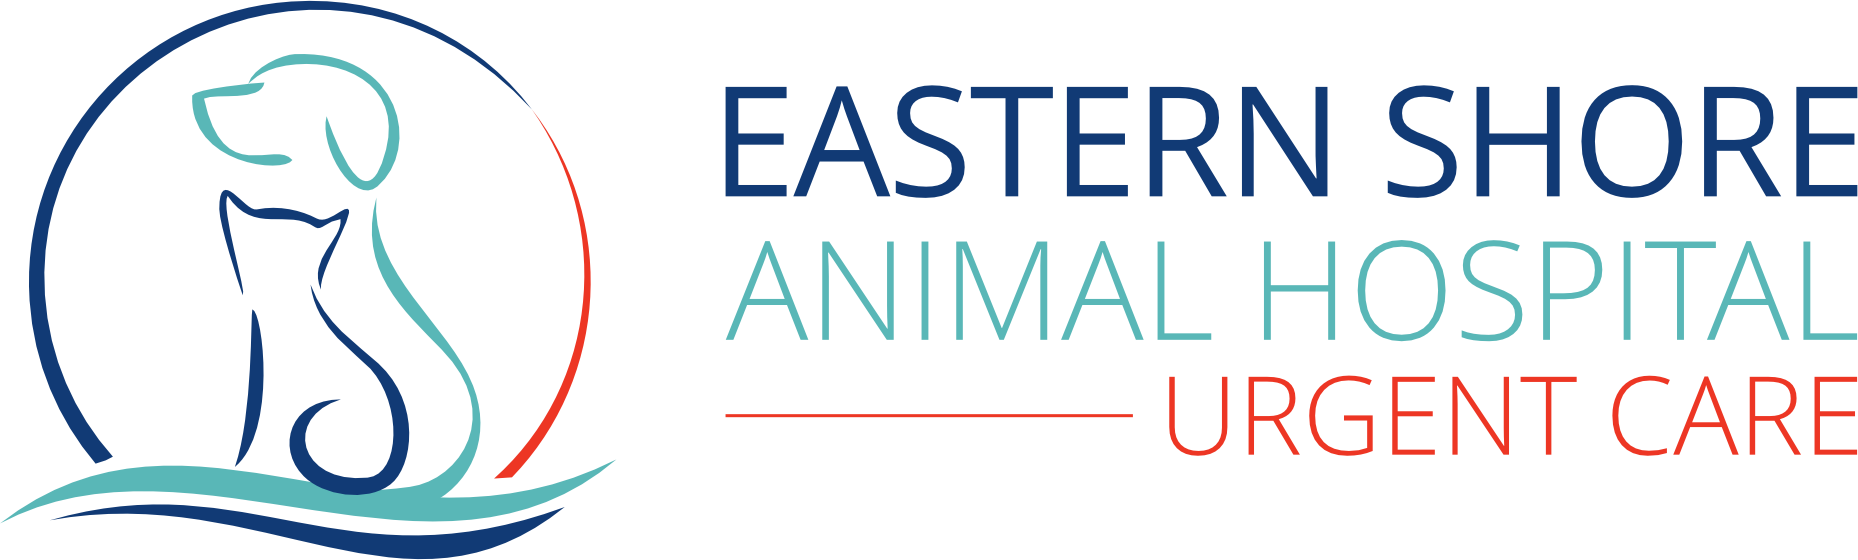 Eastern Shore Animal Hospital & Urgent Care